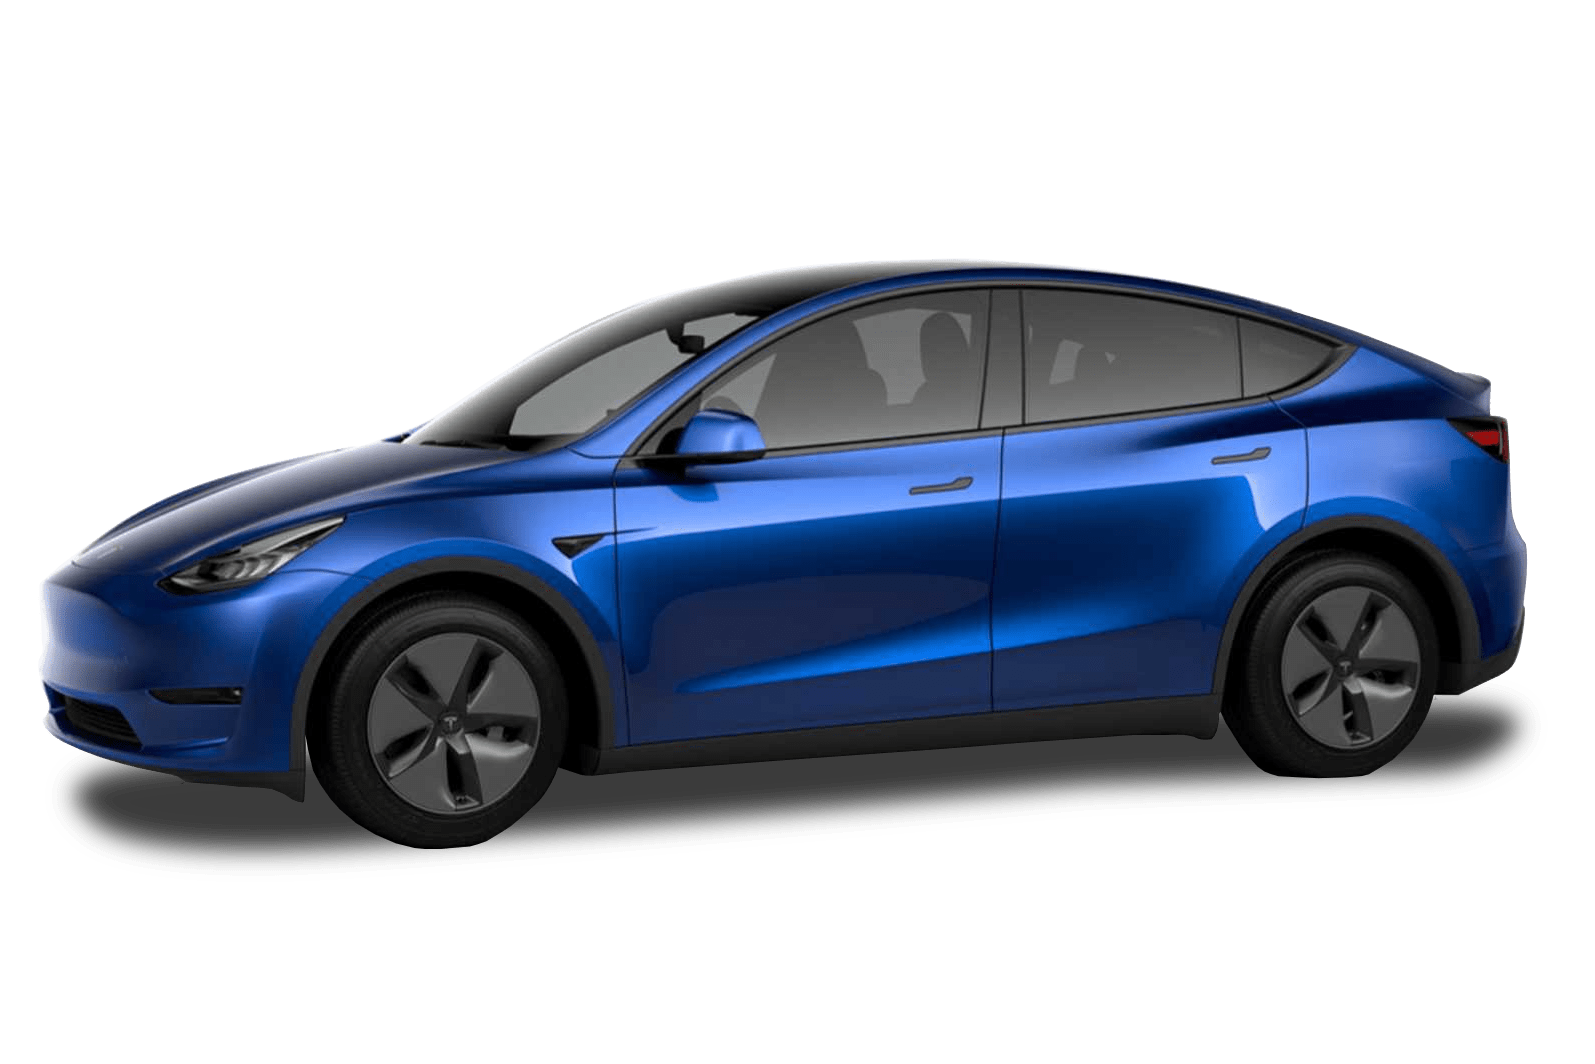 Tesla Model Y: Price, Features, and Design Specs